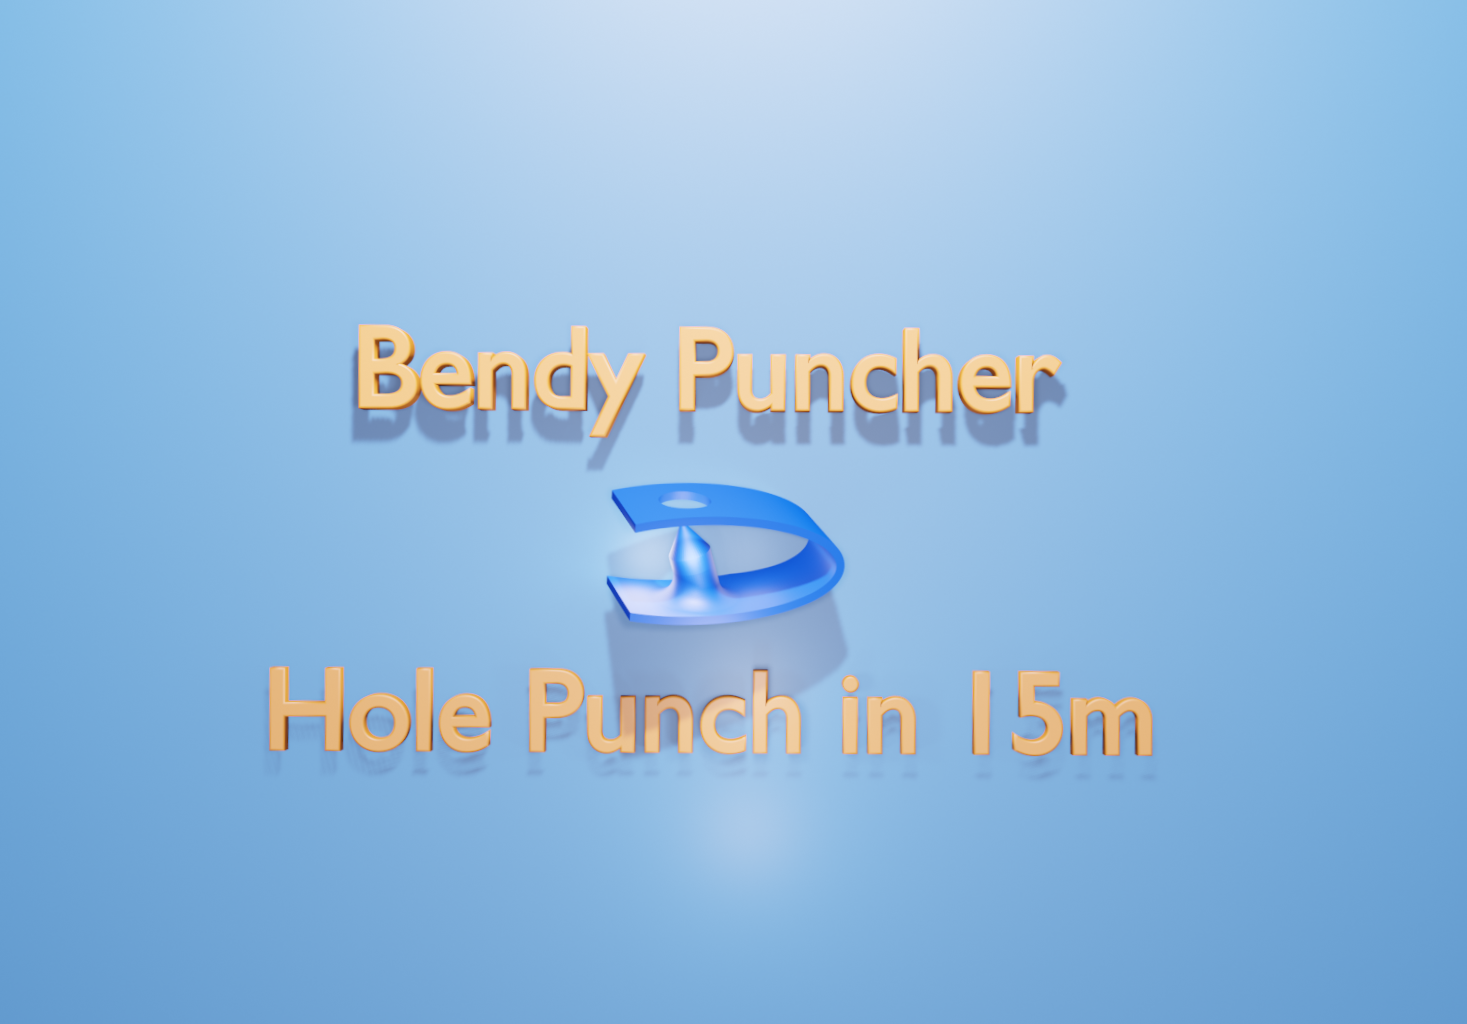 Bendy Puncher